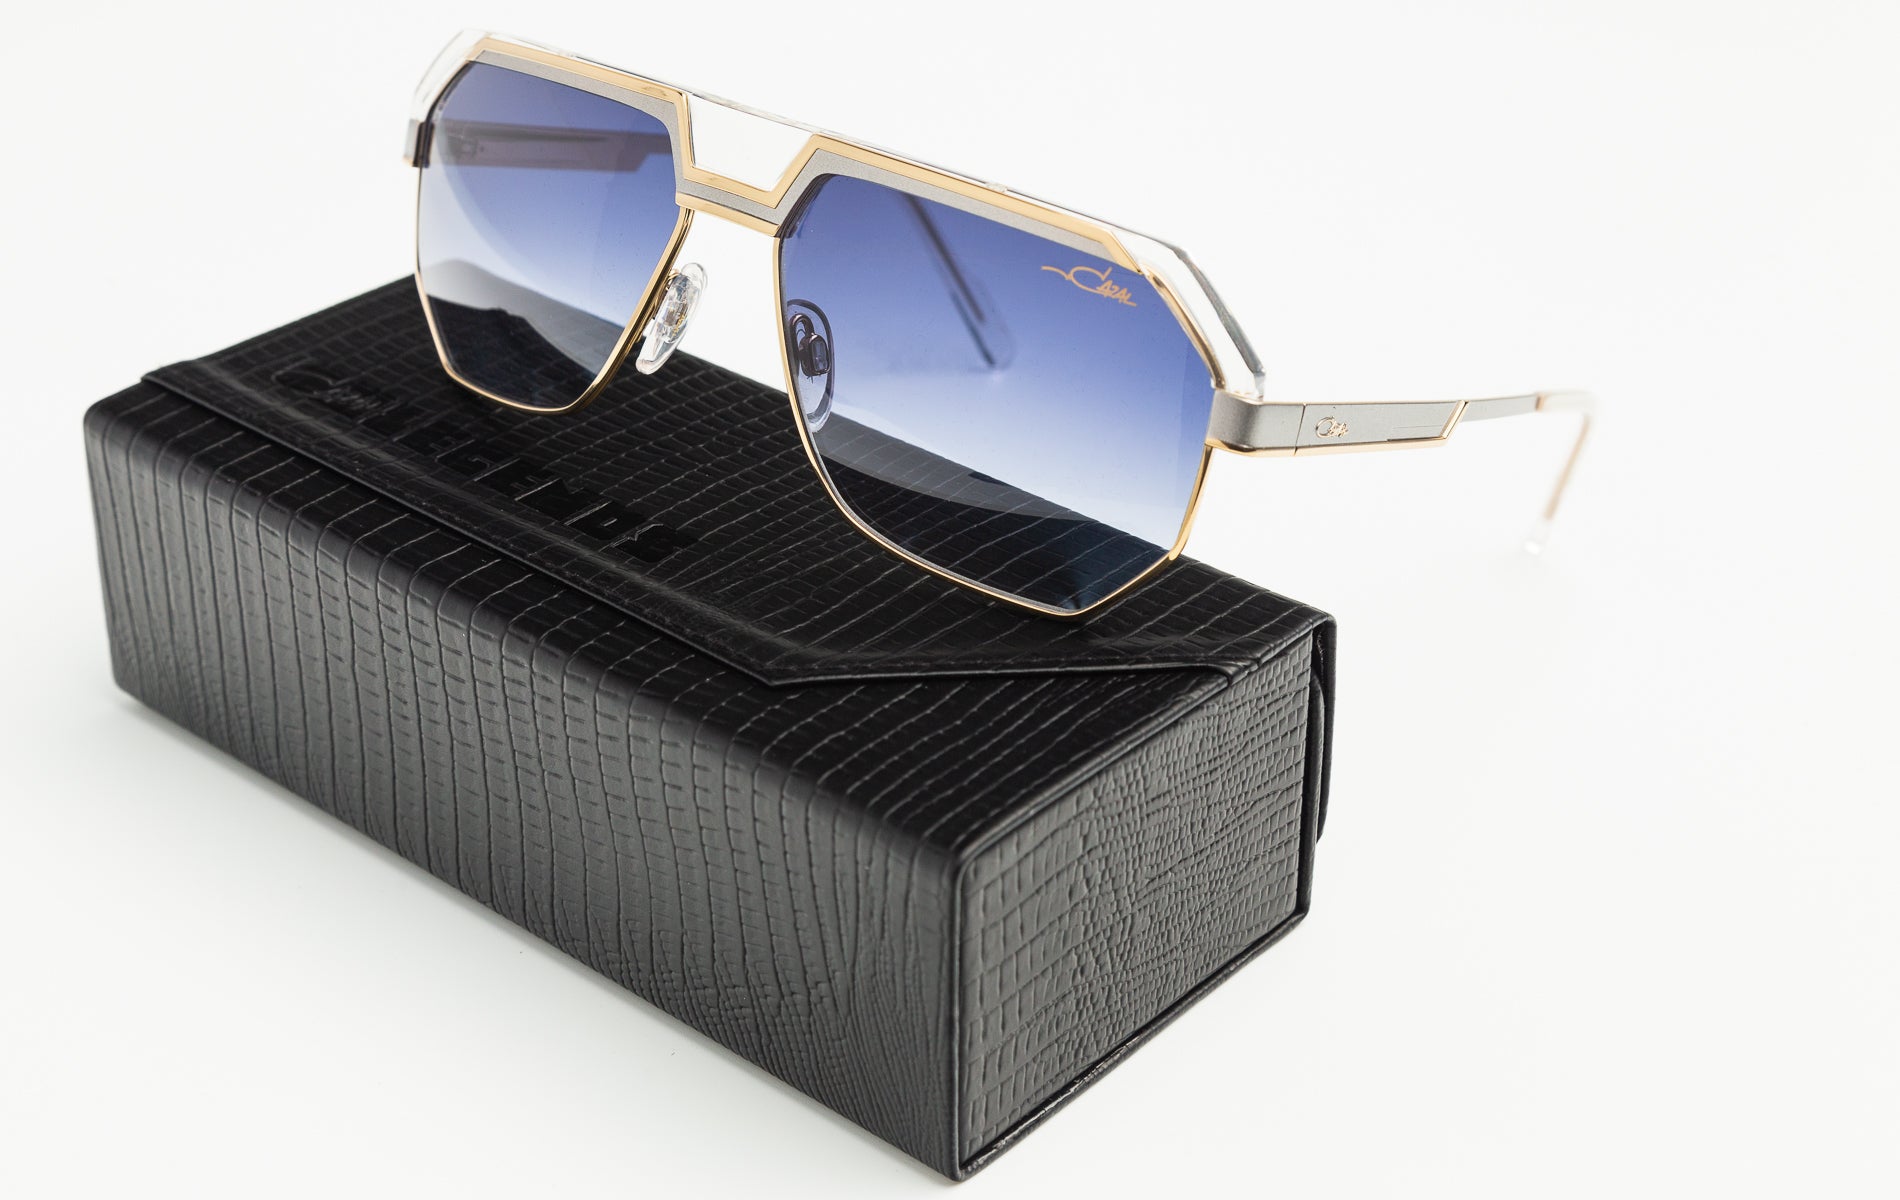 Cazal sunglasses, crystal gold frame